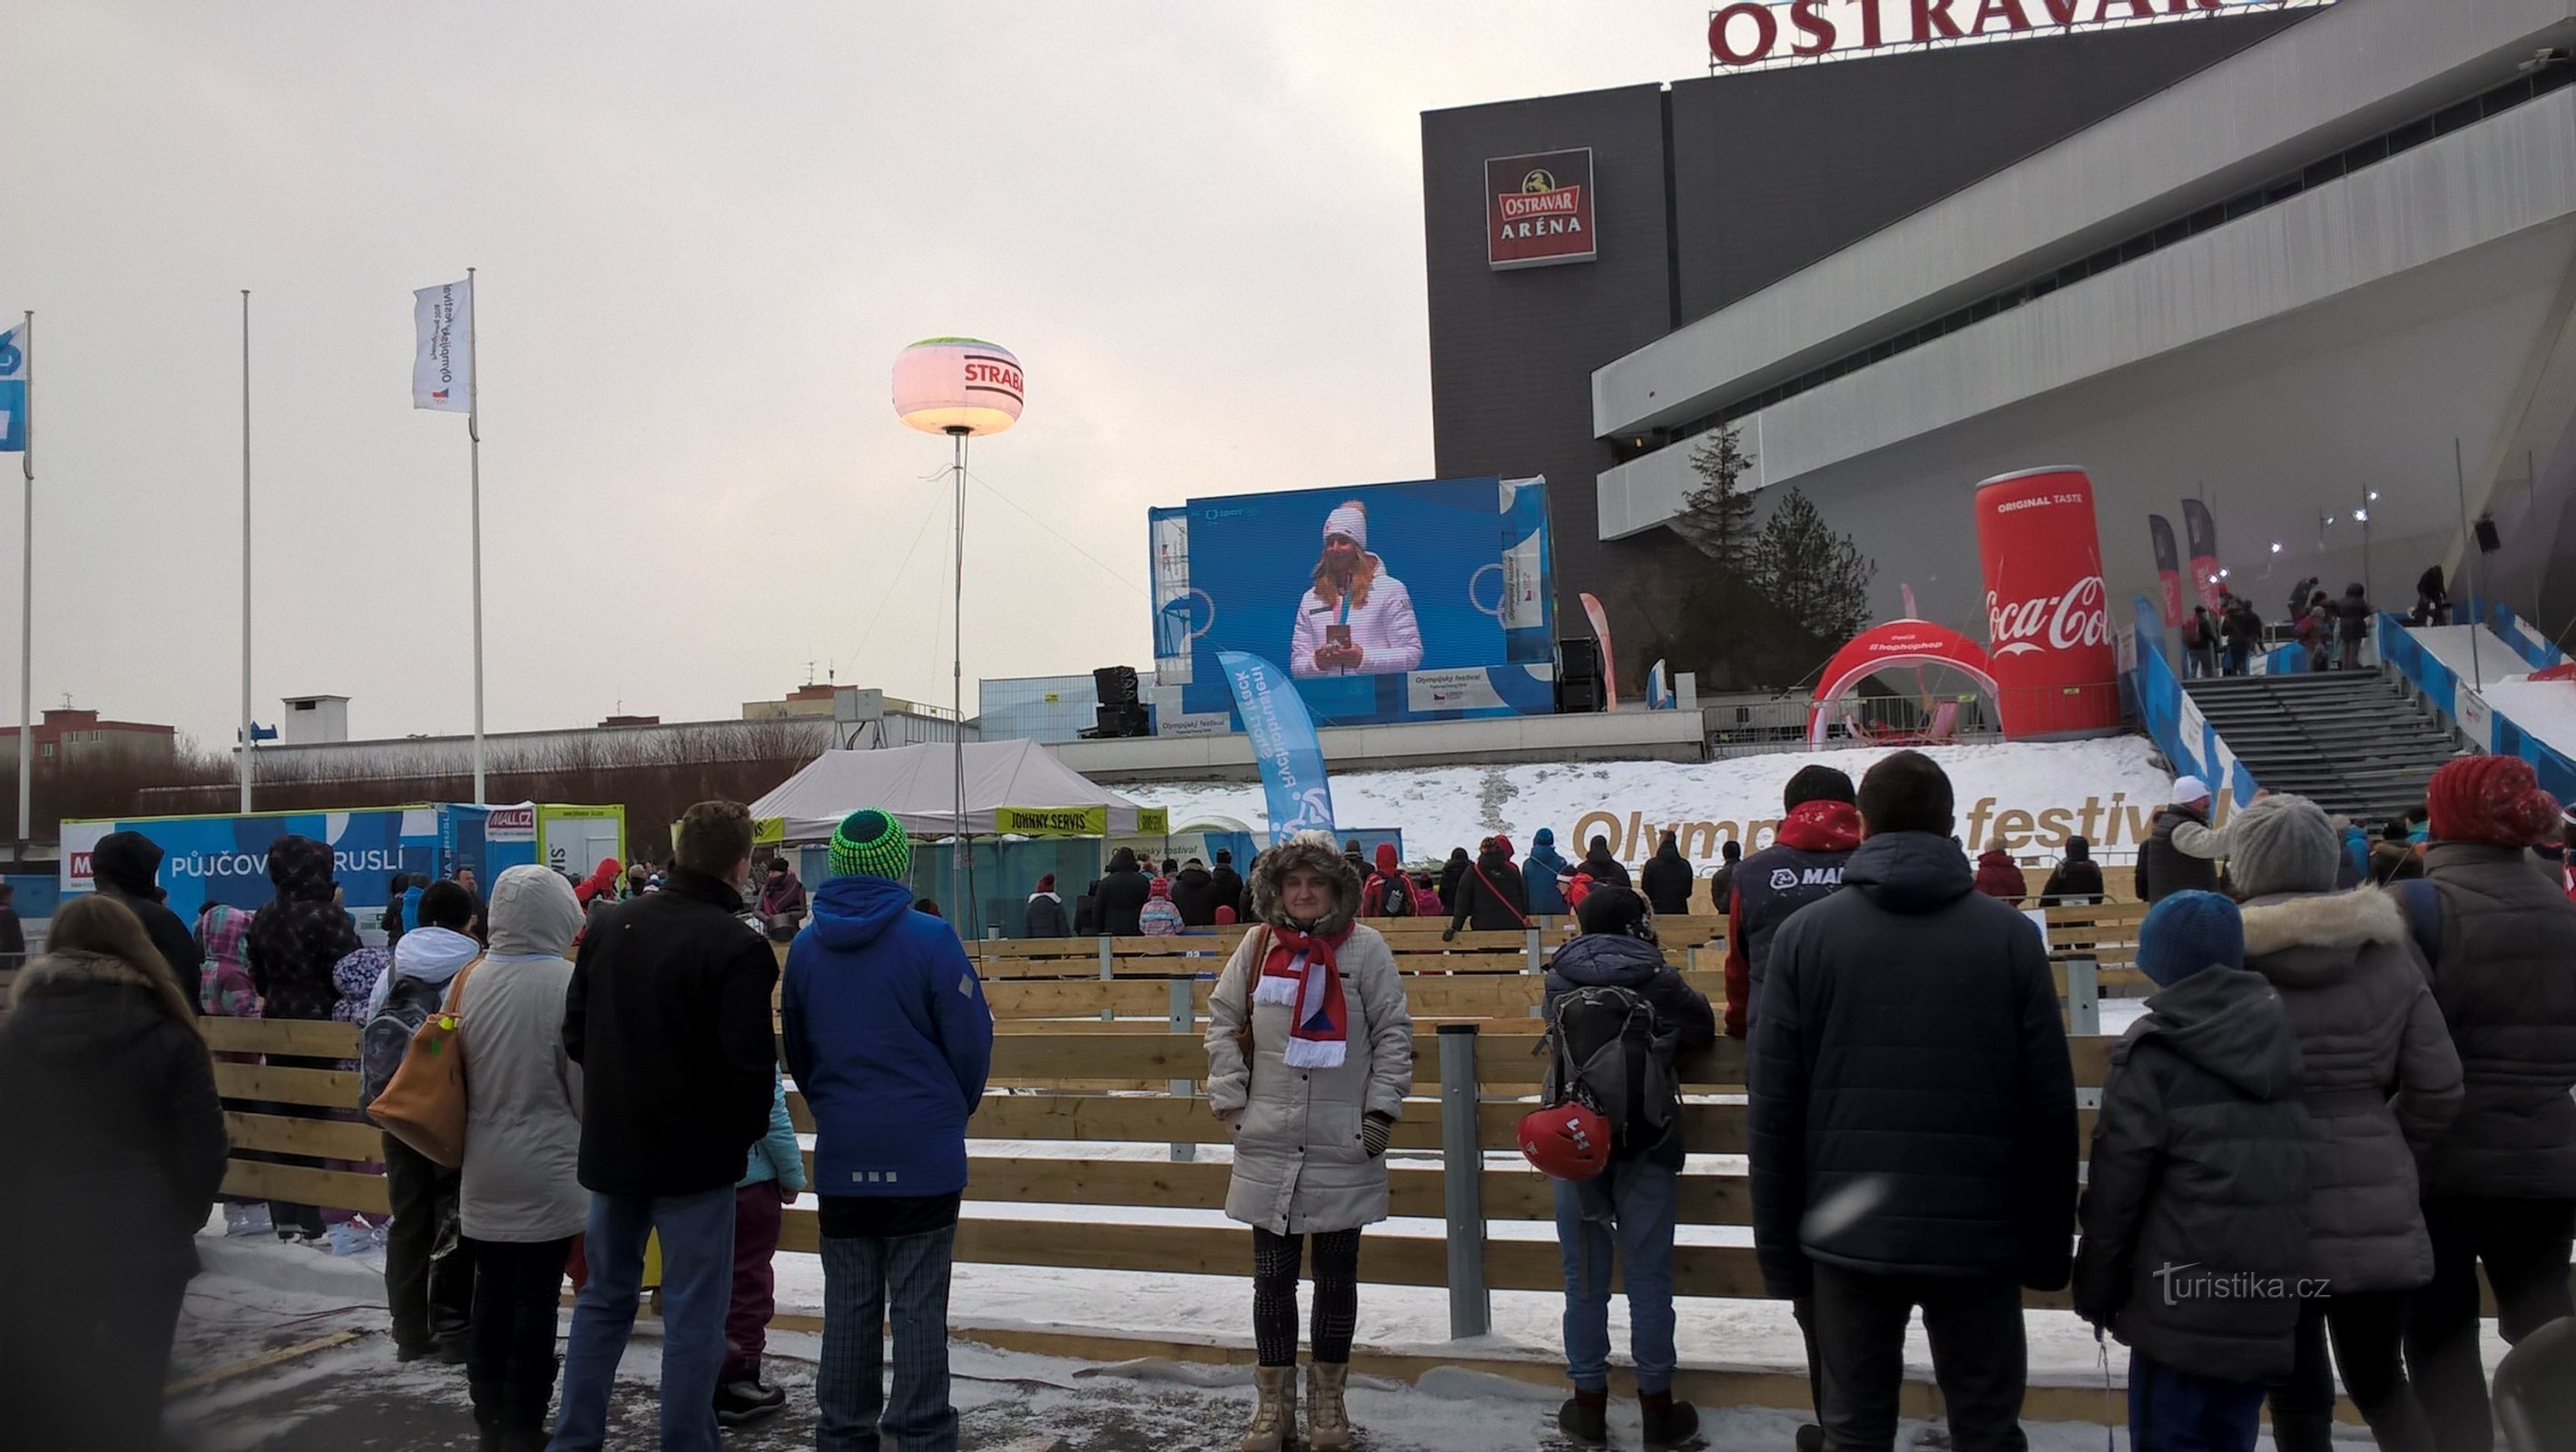 Olympisch Festival PyeongChang 2018 in Ostrava